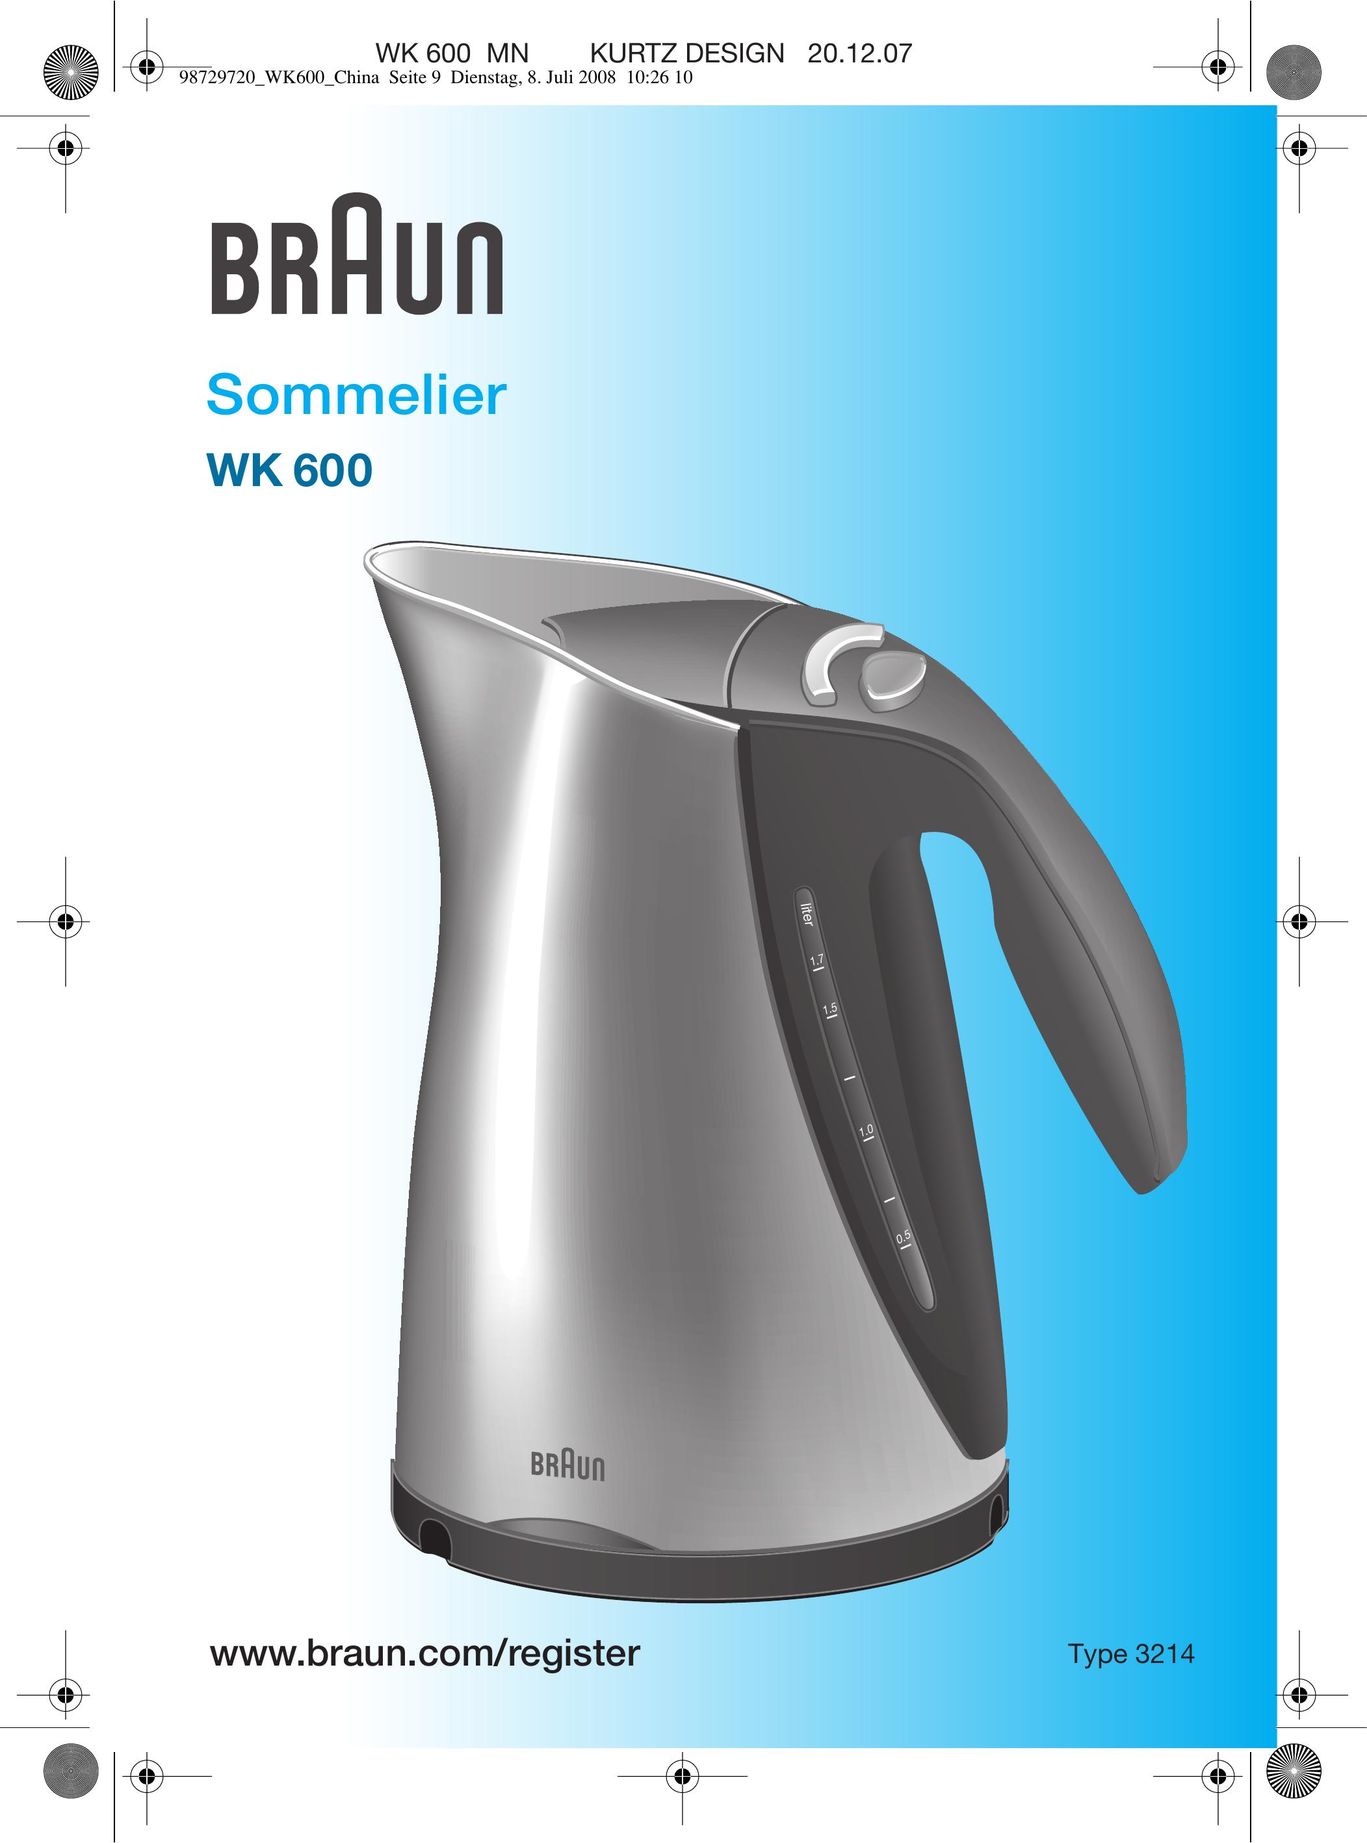 Braun WK 600 Hot Beverage Maker User Manual